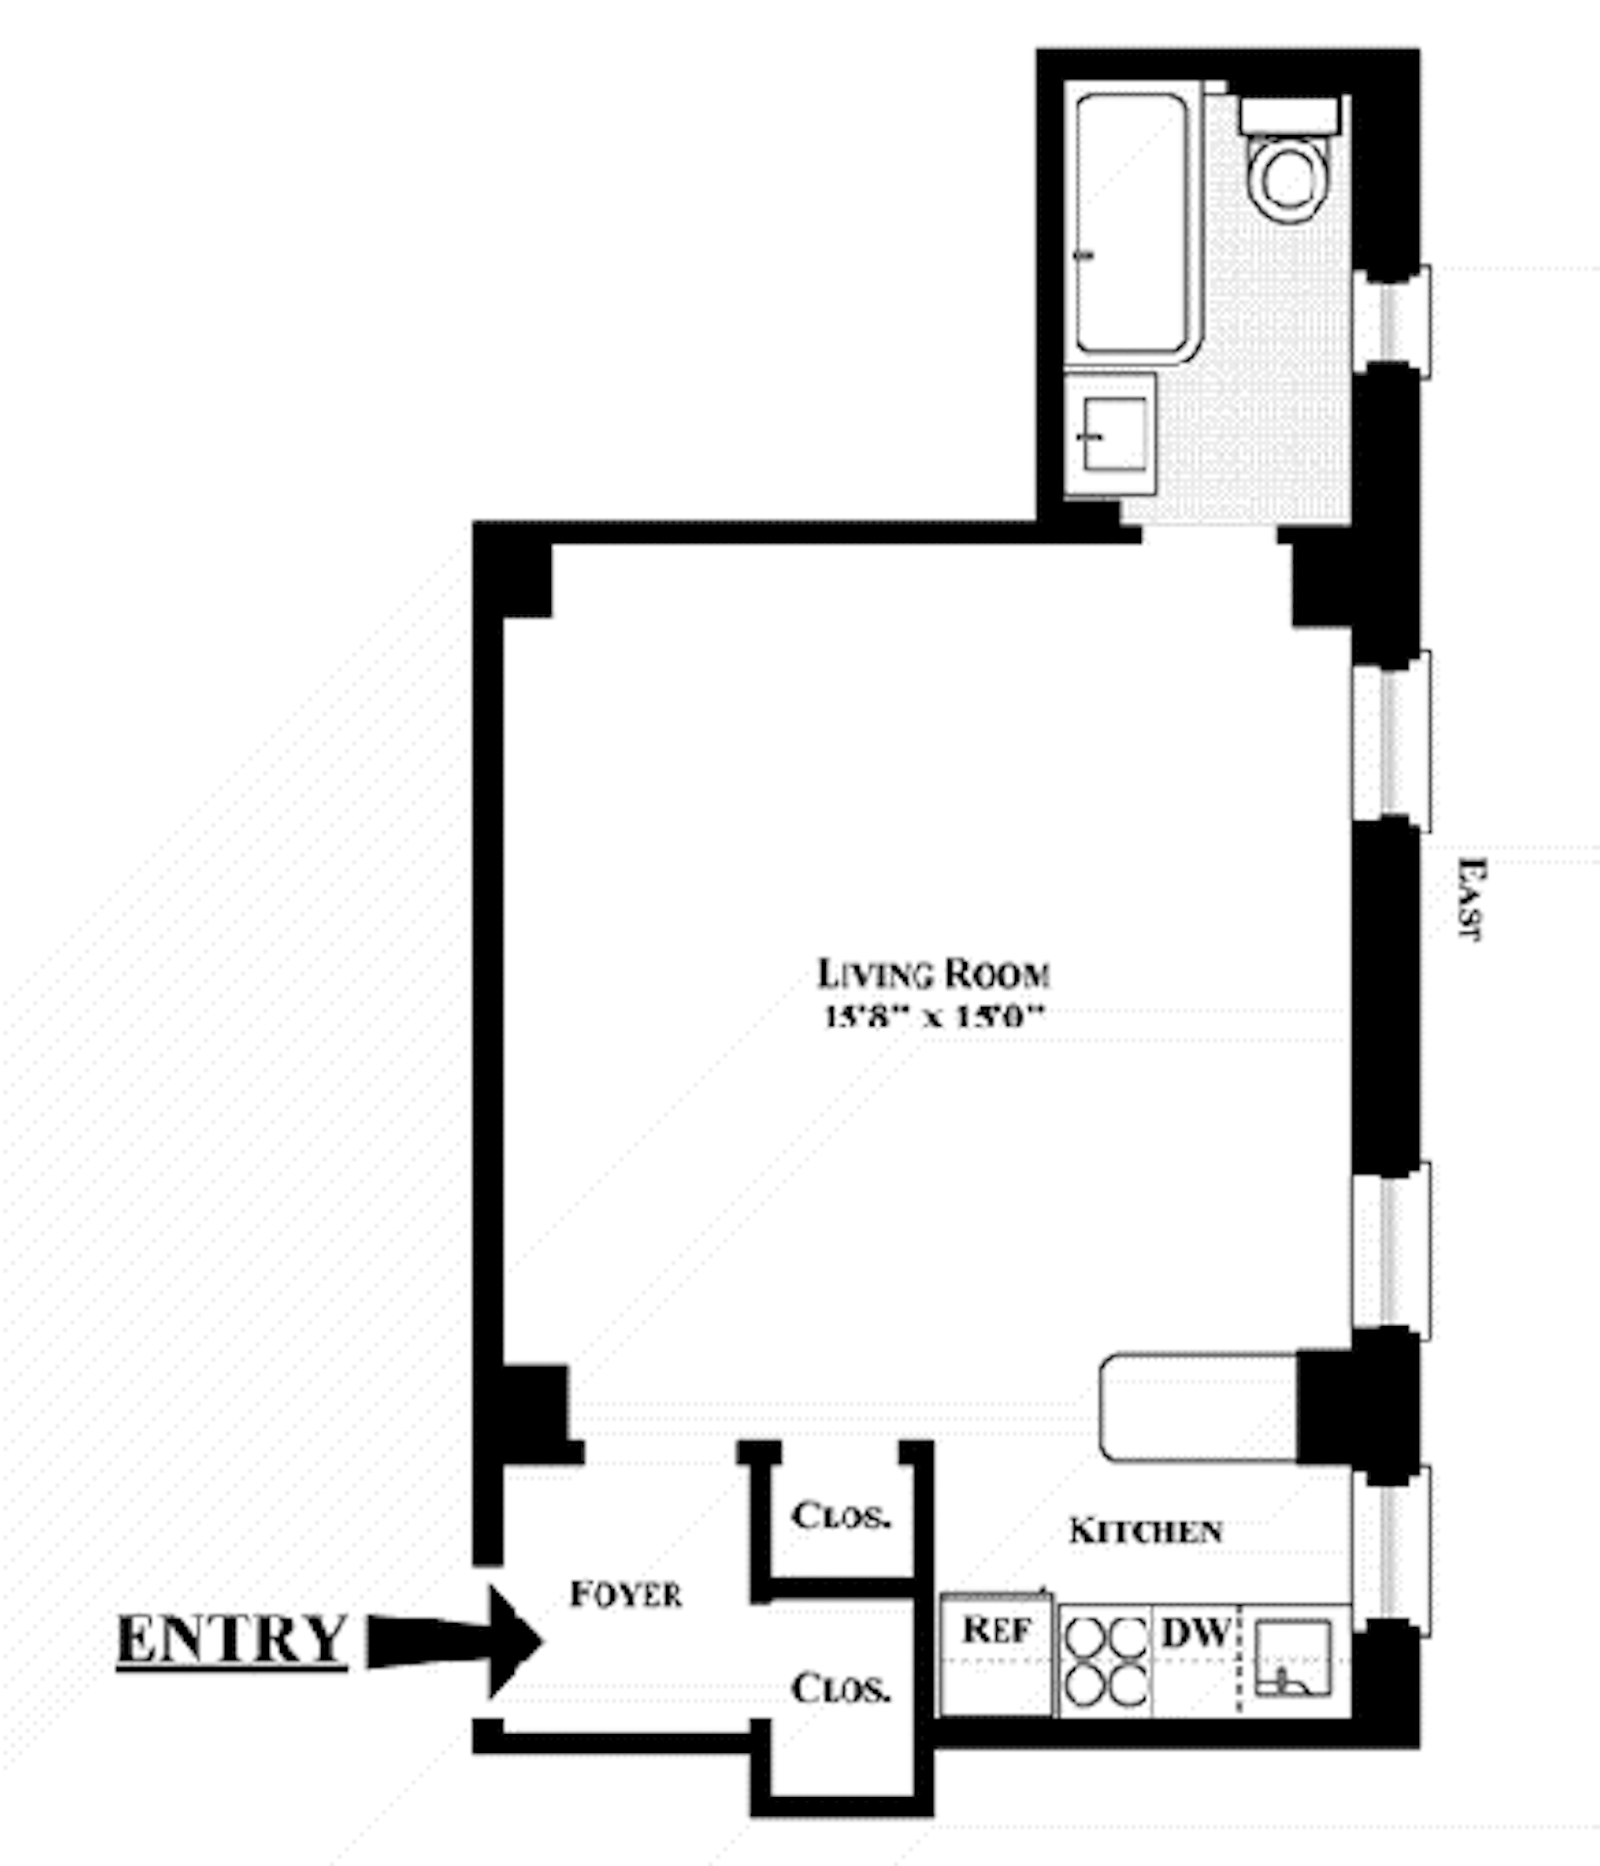 Floorplan for 17 West 64th Street, 2D